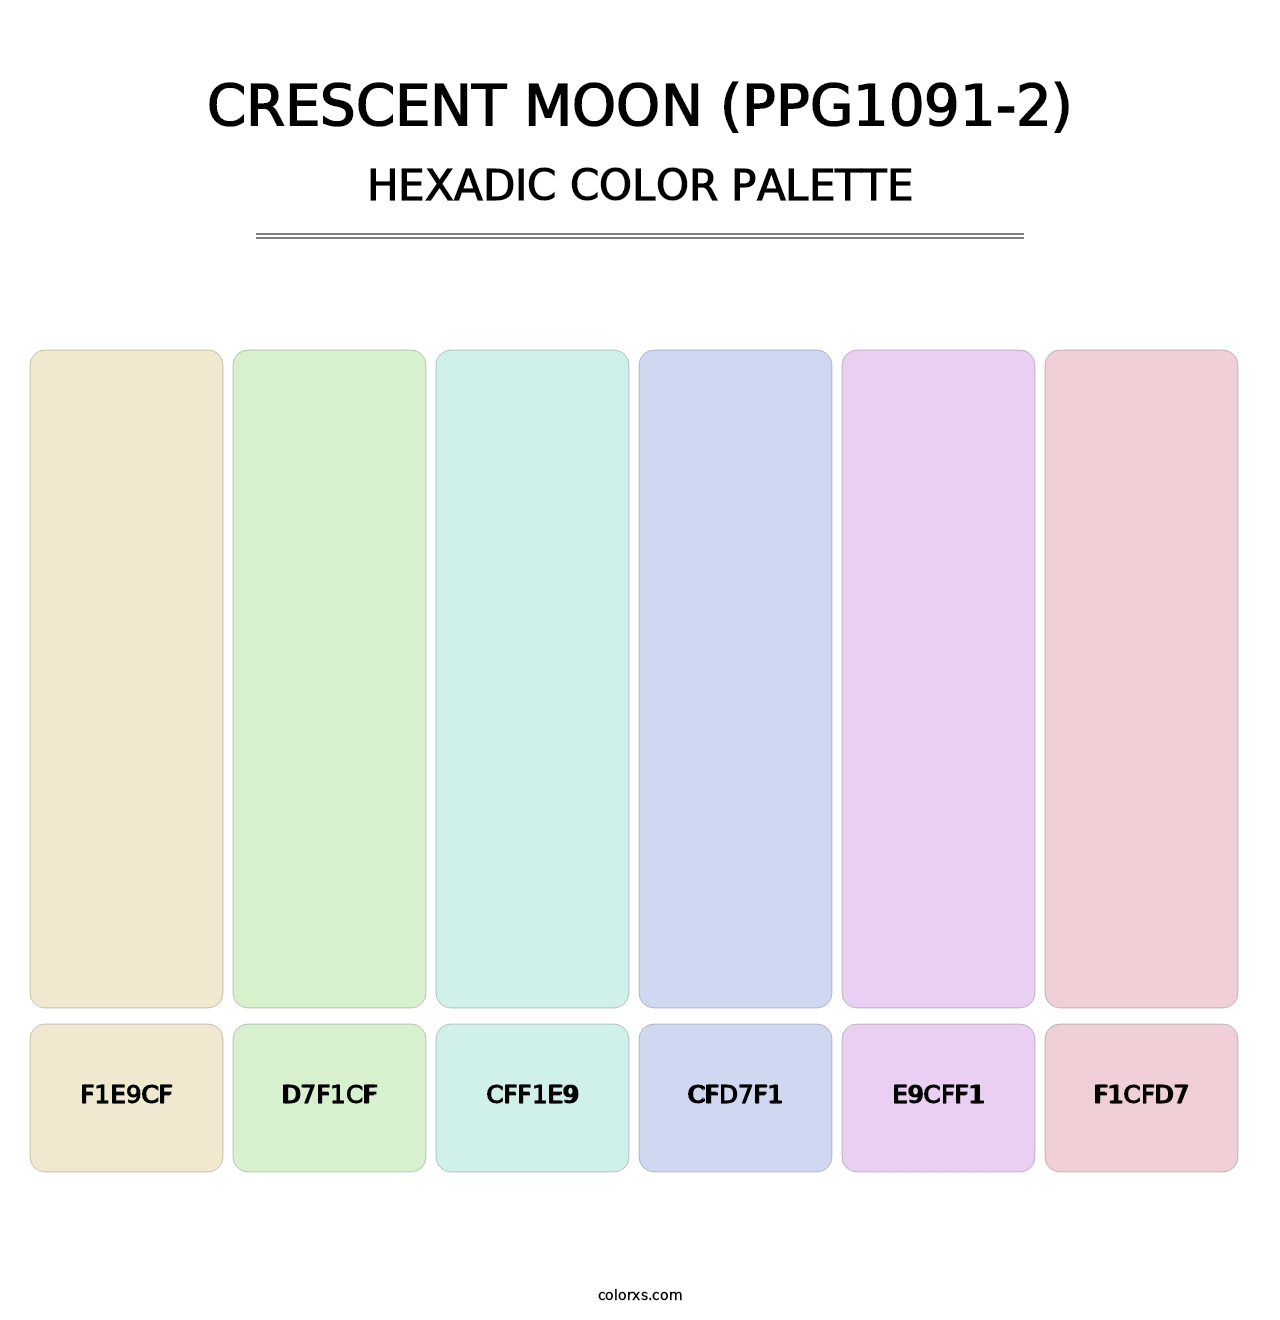 Crescent Moon (PPG1091-2) - Hexadic Color Palette